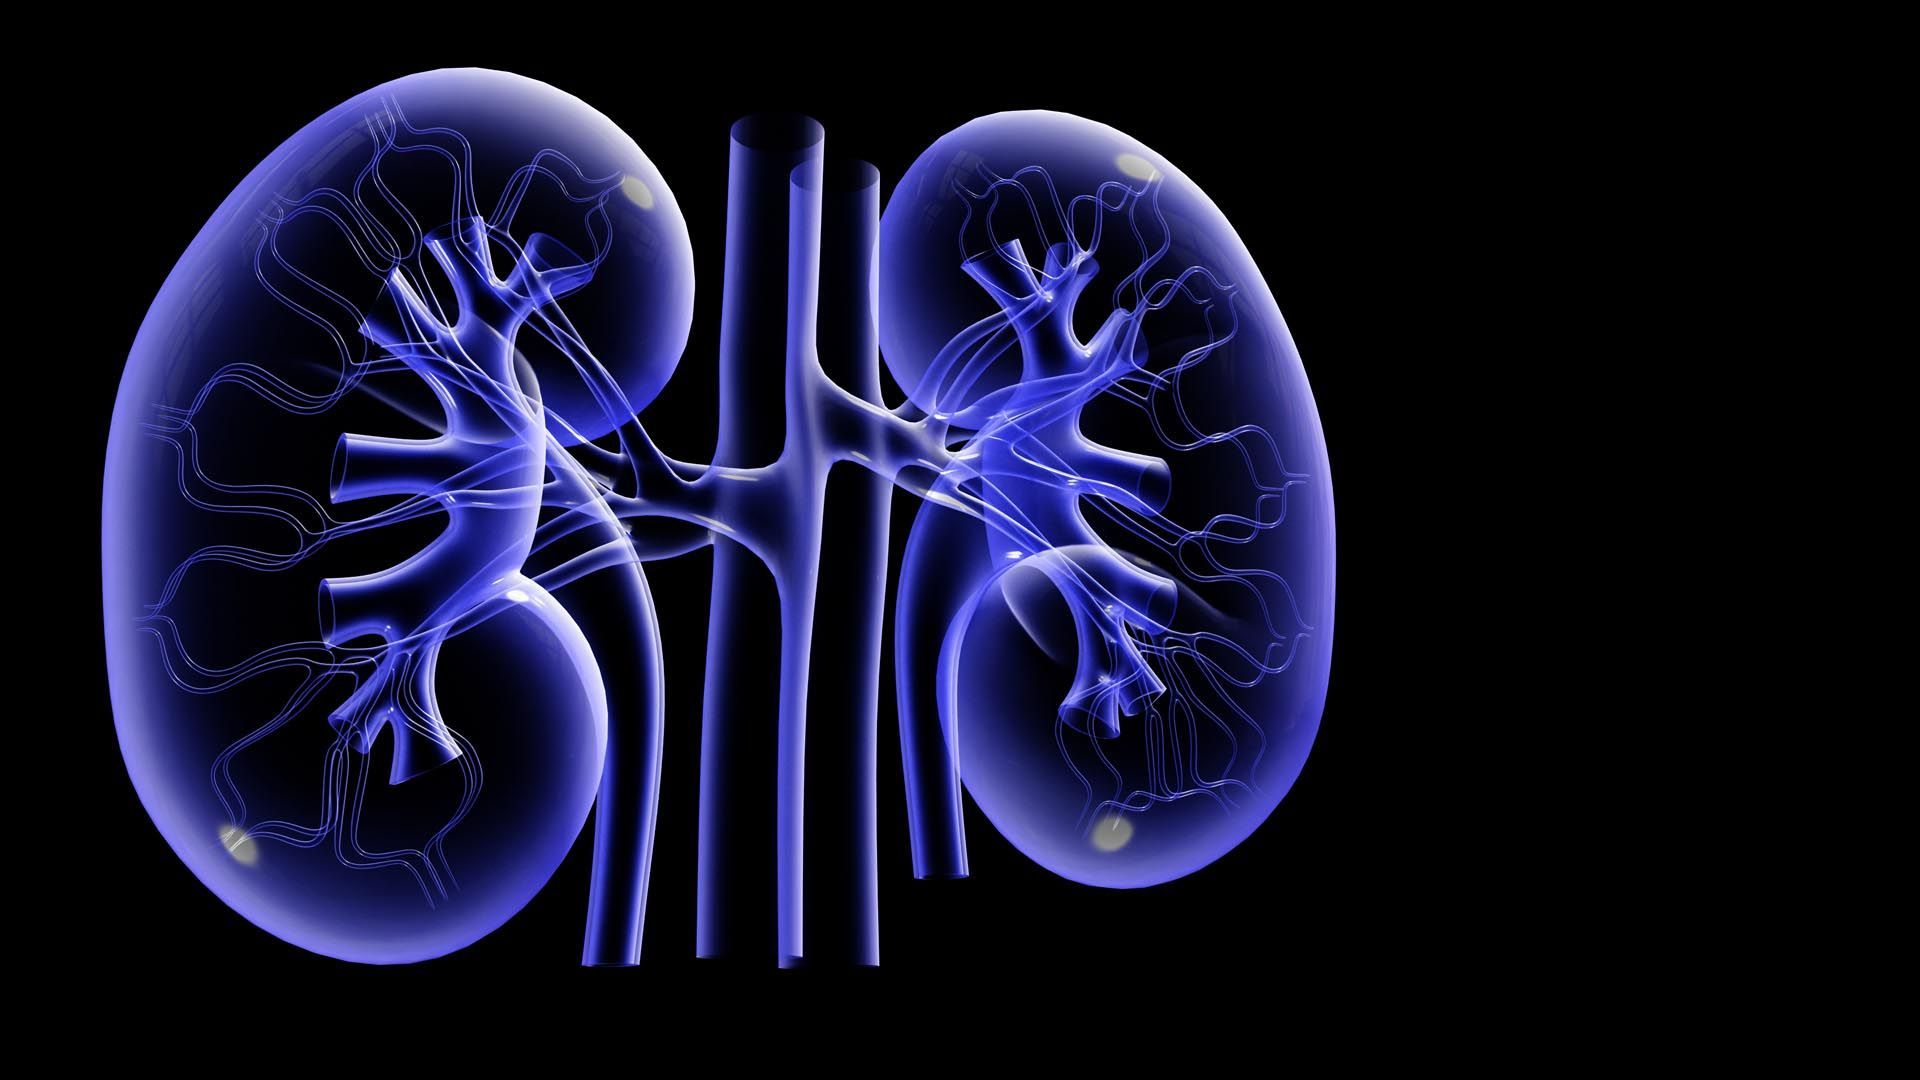 Kidney Disease Treatment Options. Polycystic kidney disease